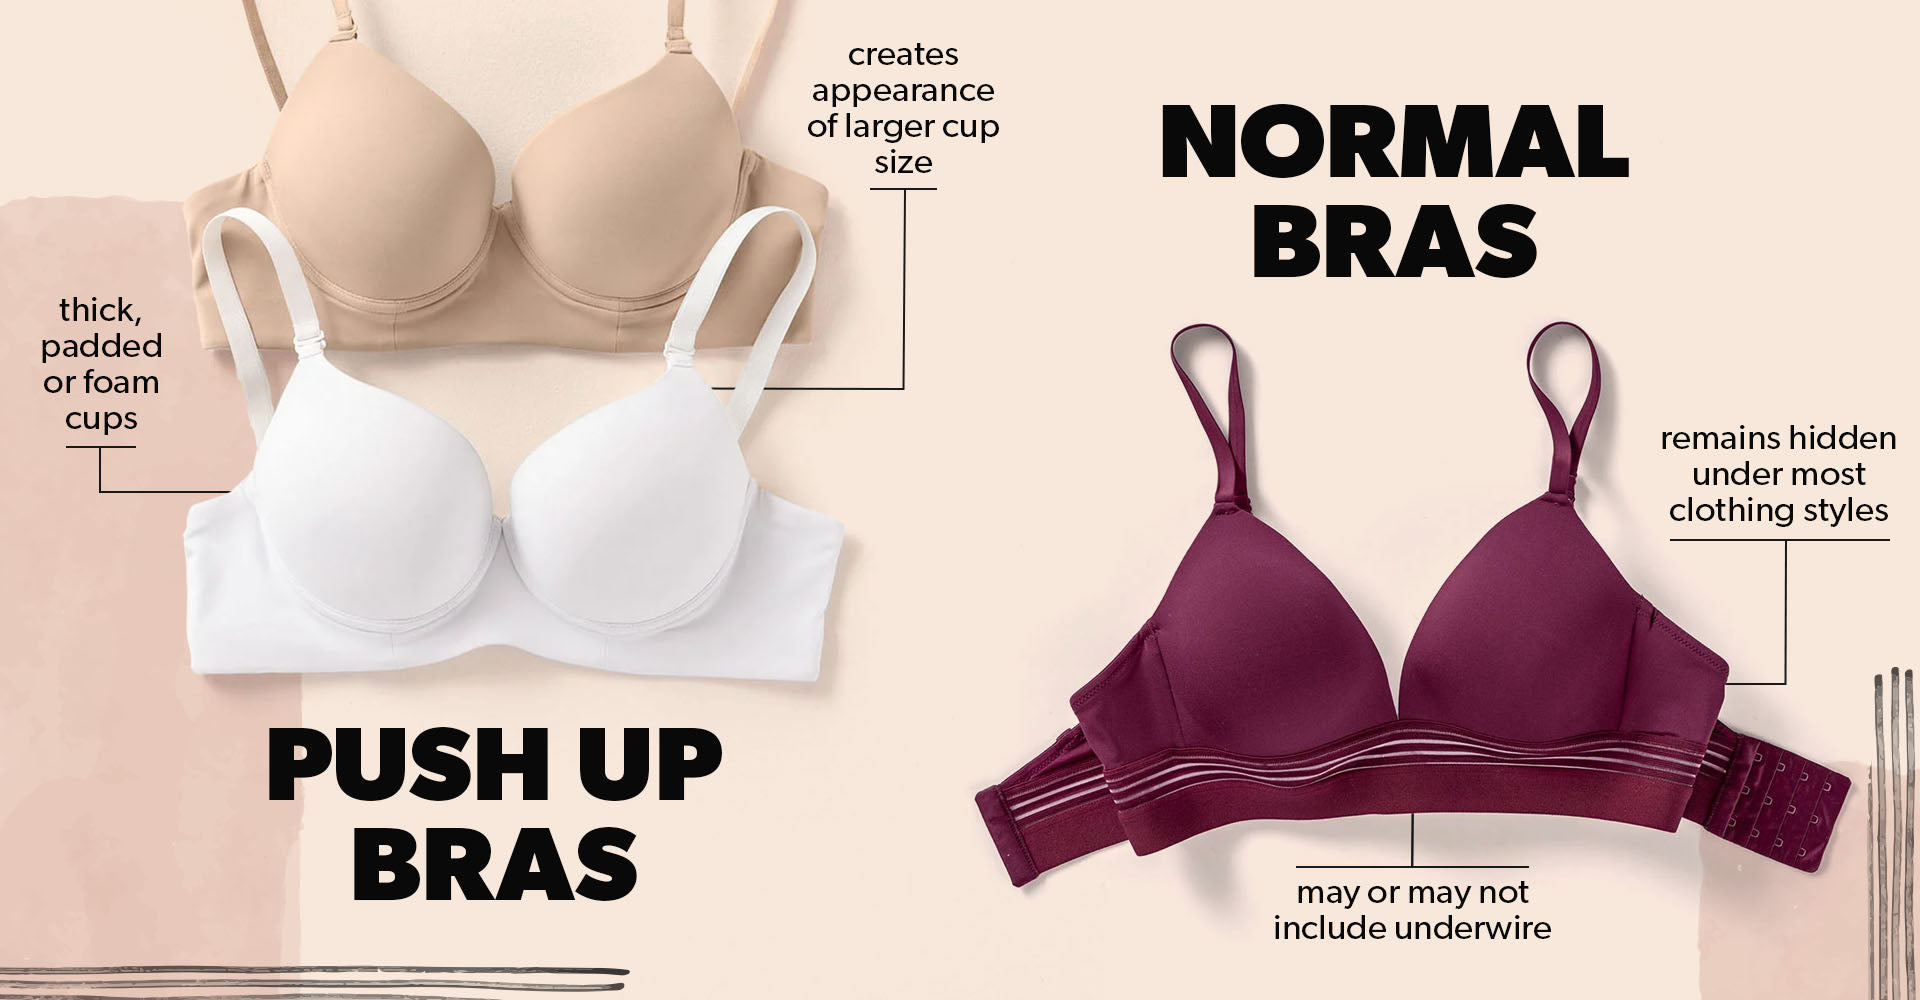 Push Up bra normal bra facts